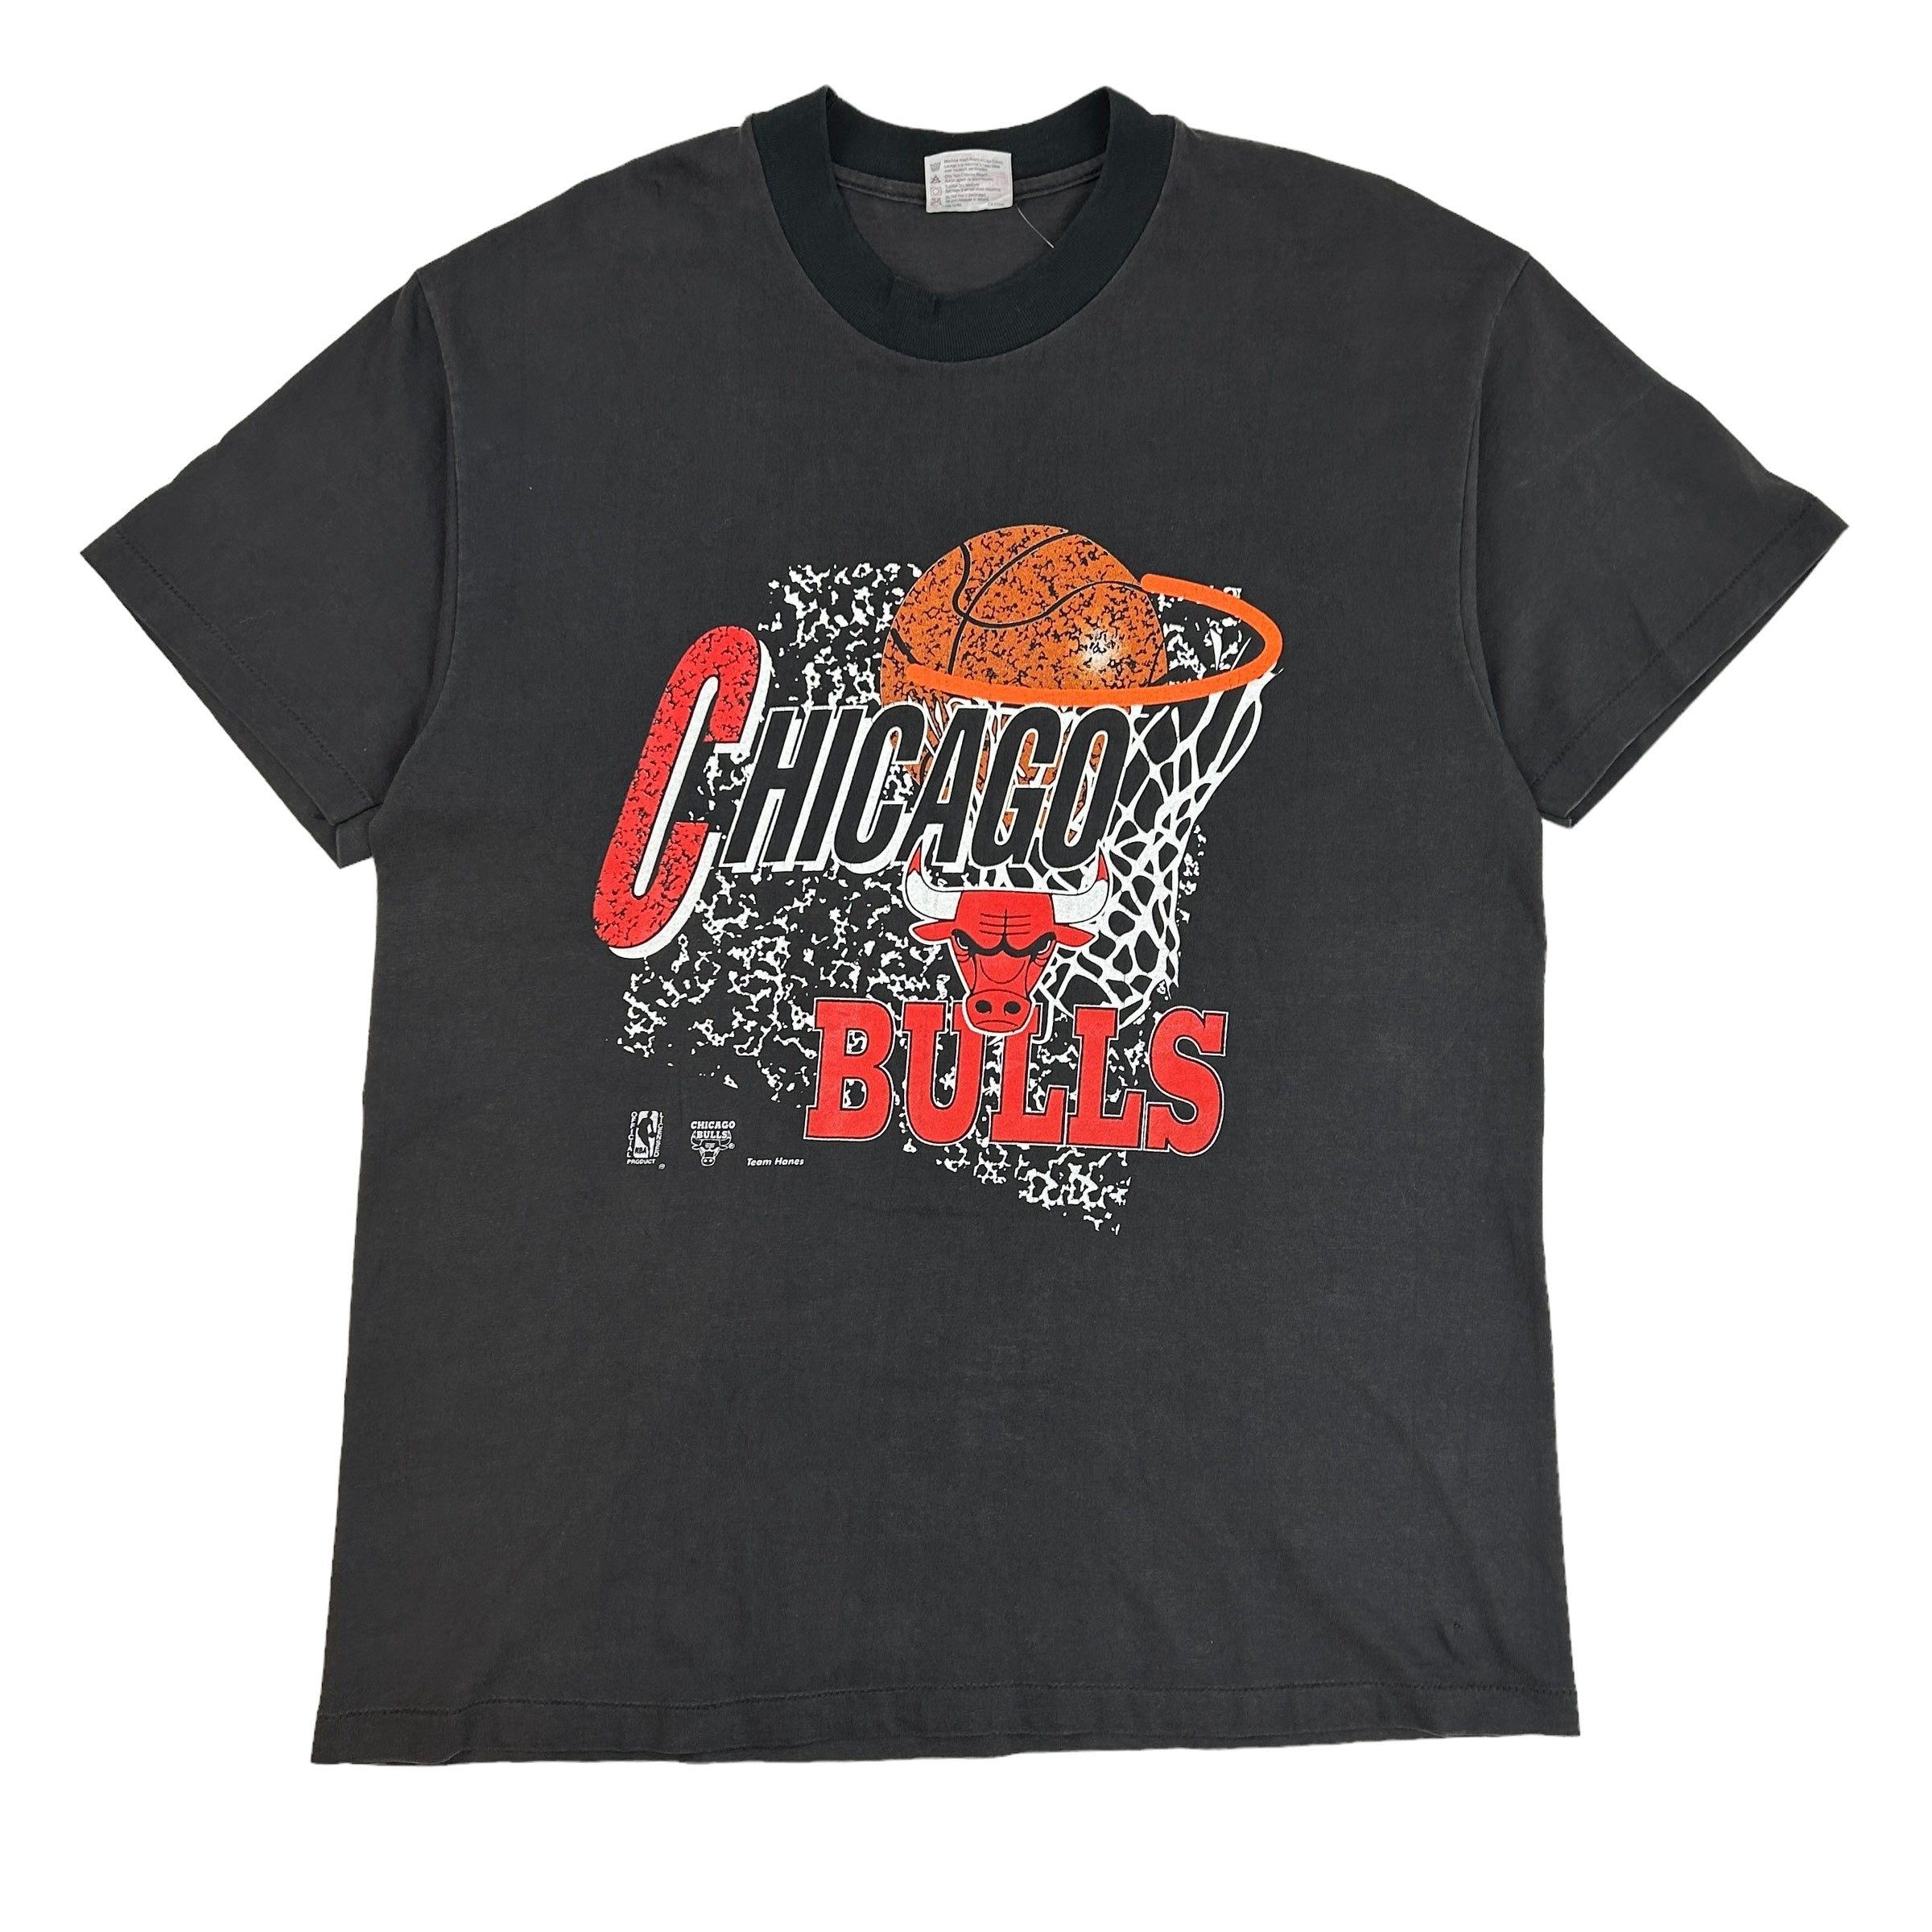 Vintage Chicago Bulls T-Shirt Black